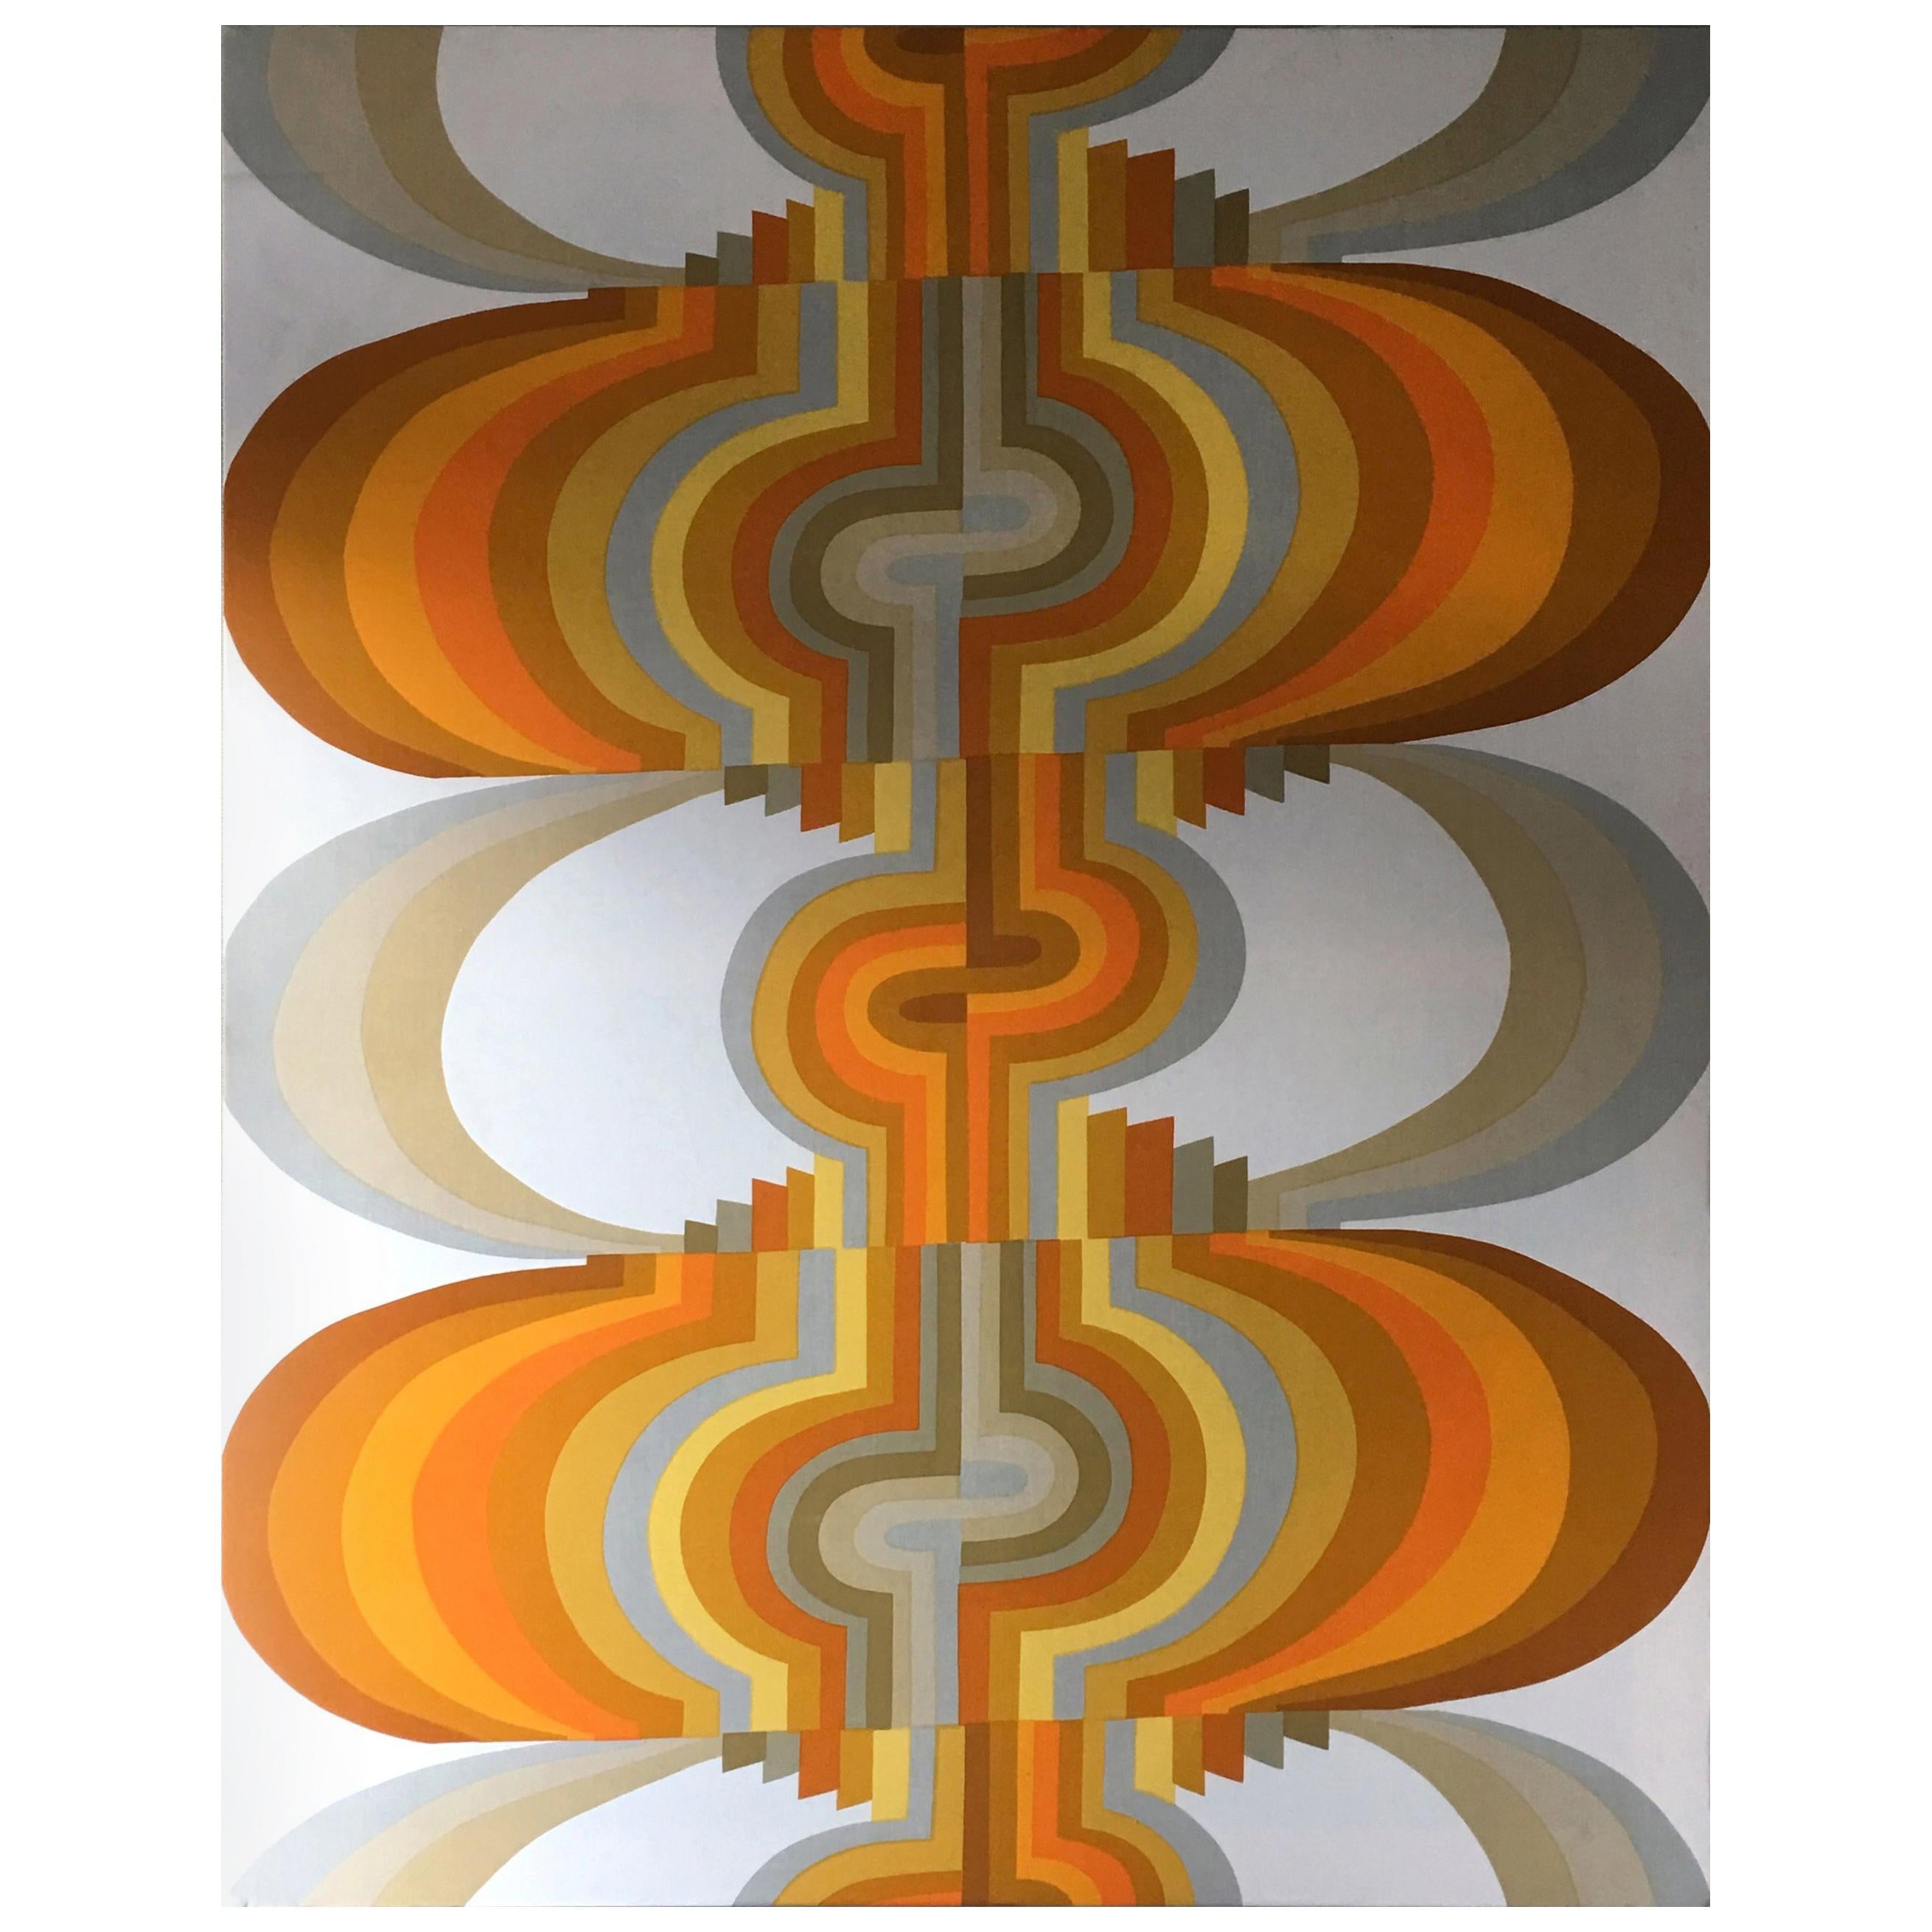 Knoll International, Francisca Reichardt, 1971. Textile, screen print on cotton.
Design 